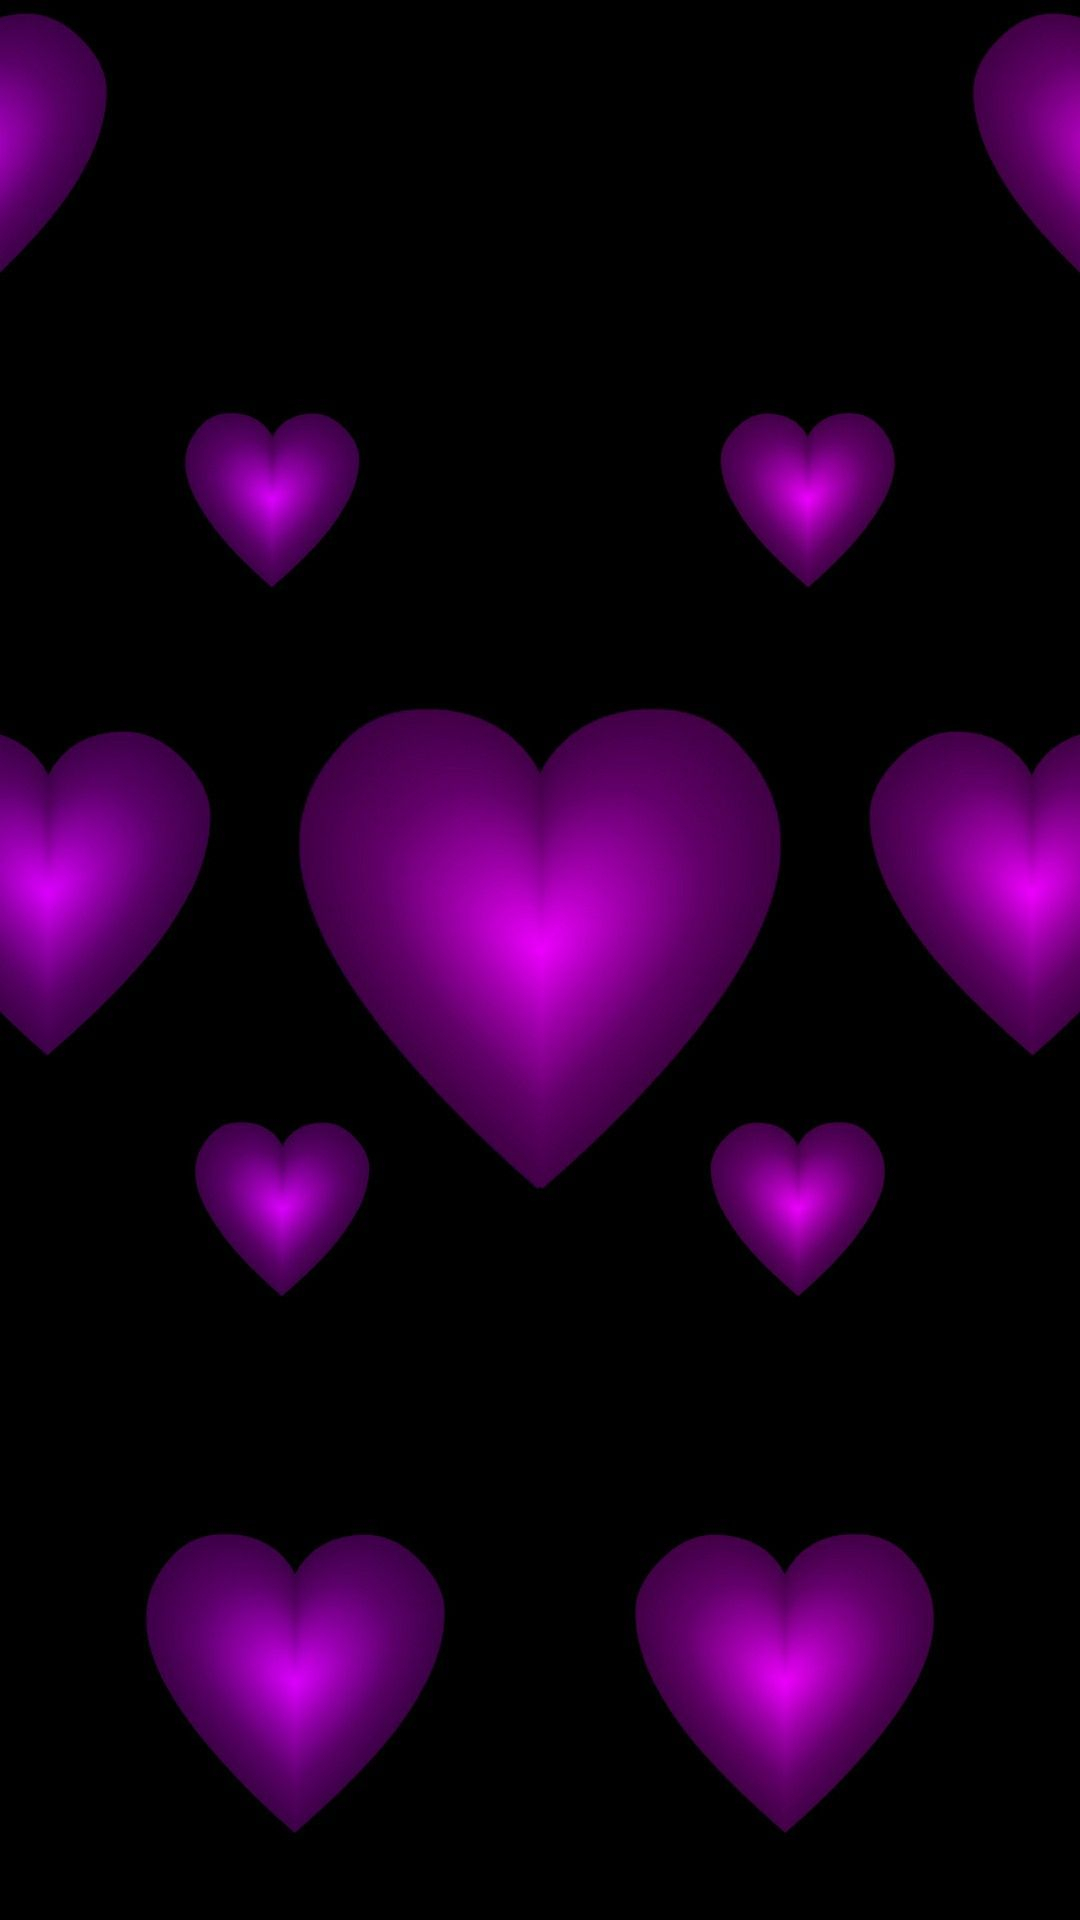 1080x1920 Purple hearts | Heart wallpaper, Color splash art, Cute backgrounds for phones